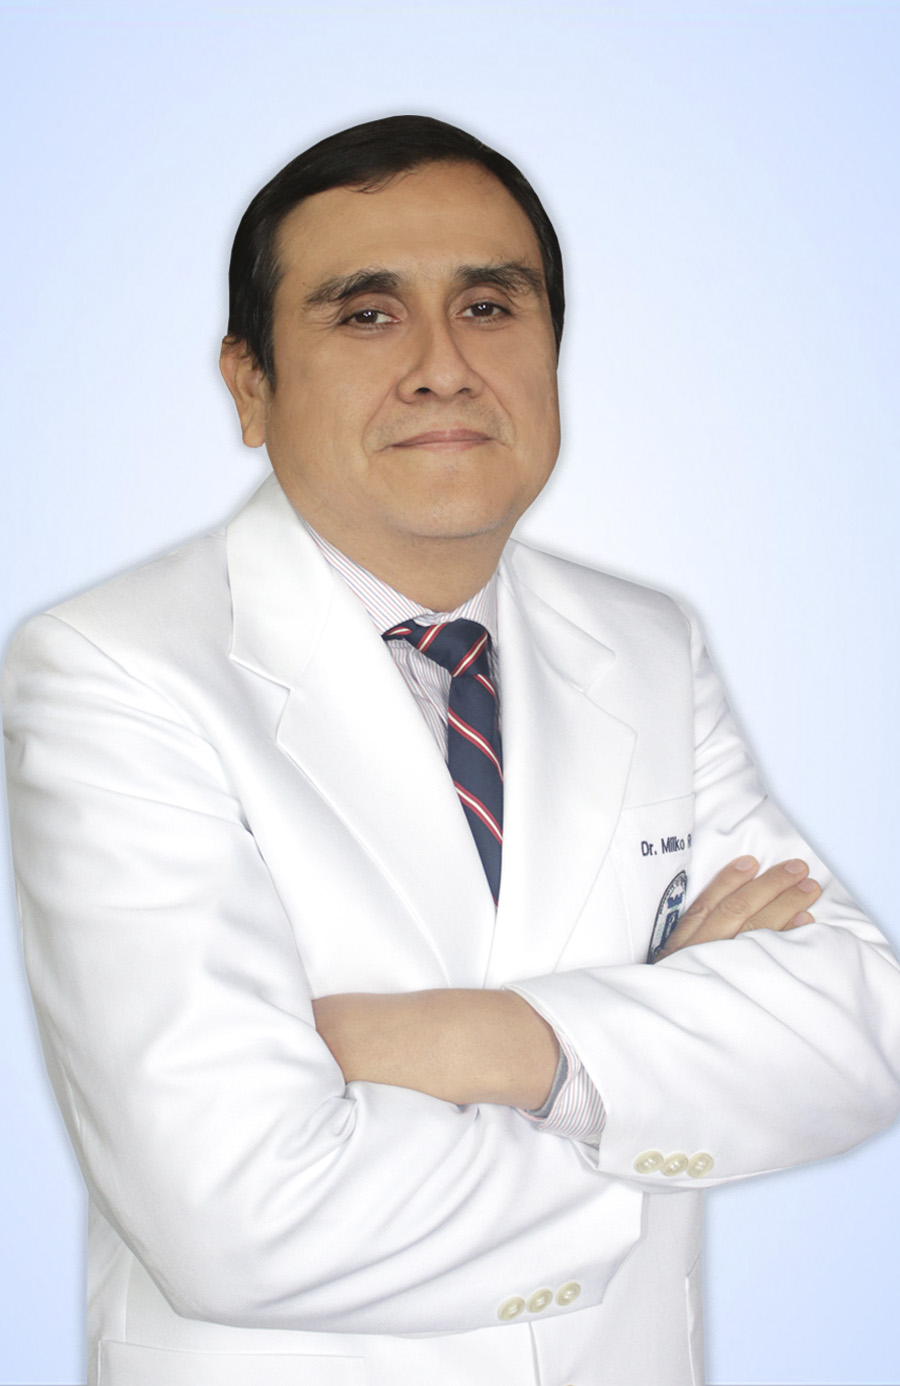 DR. RAMOS